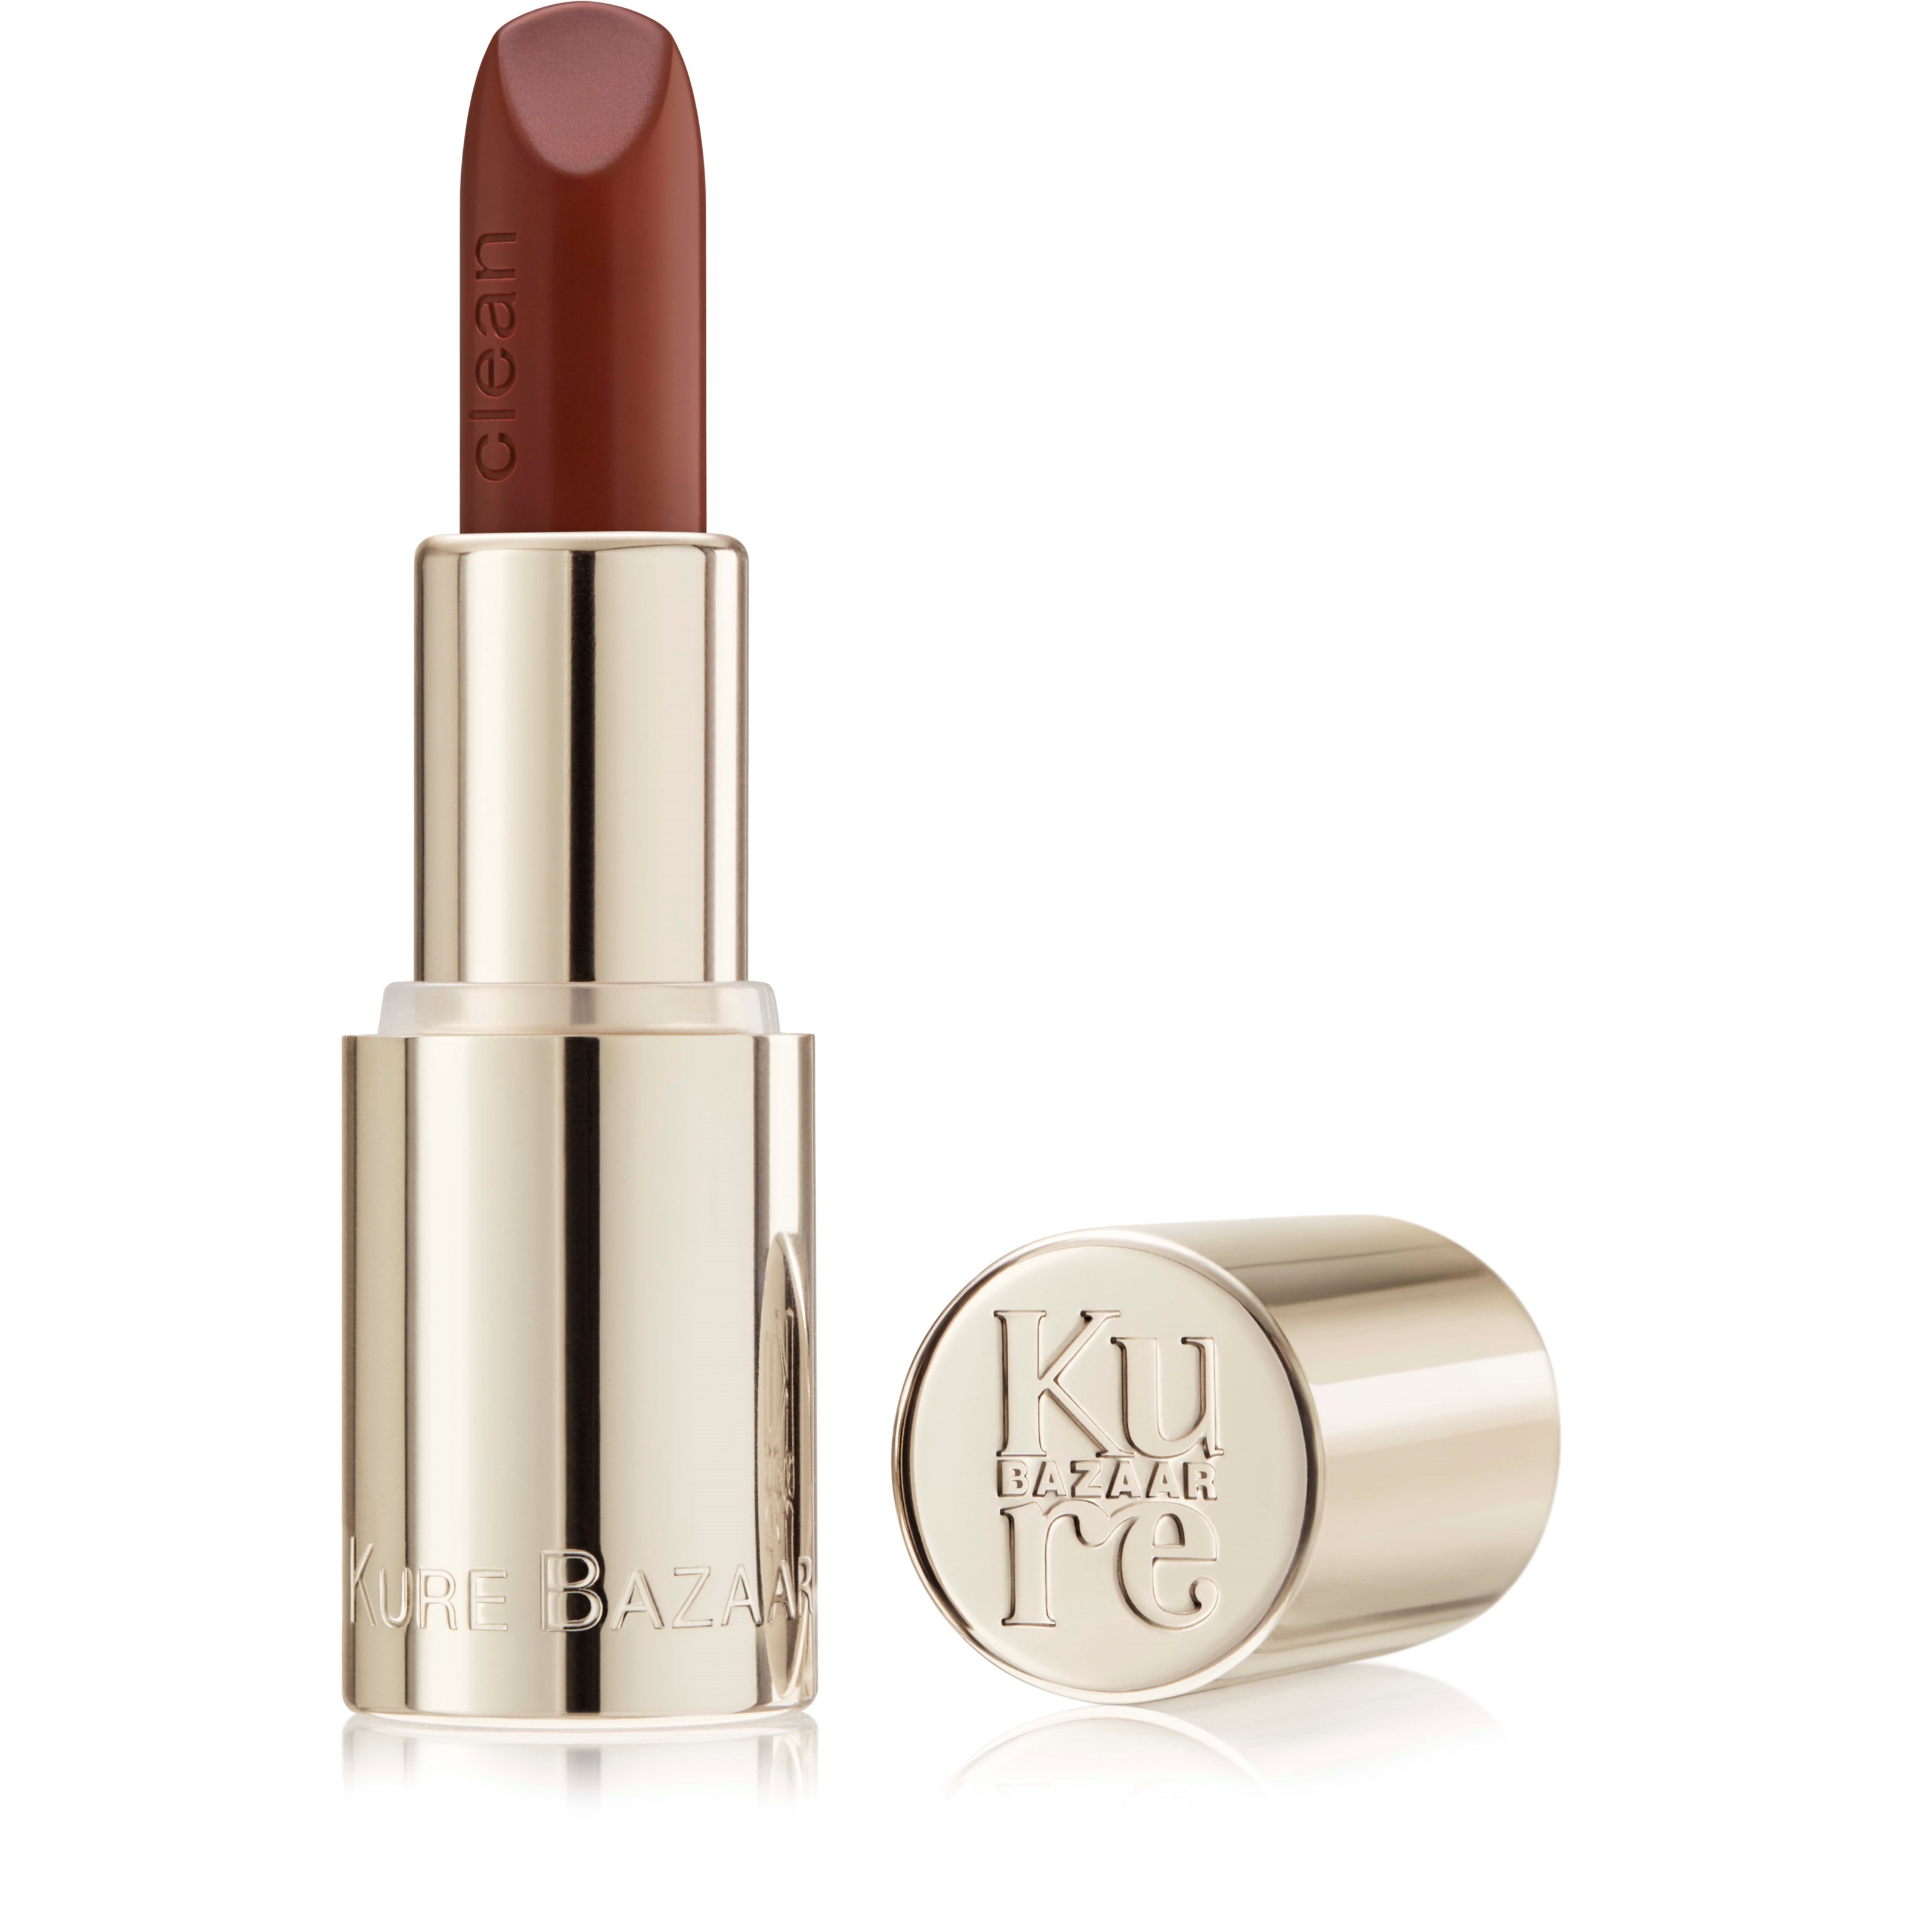 Läs mer om Kure Bazaar Matte lipstick Terre Rose